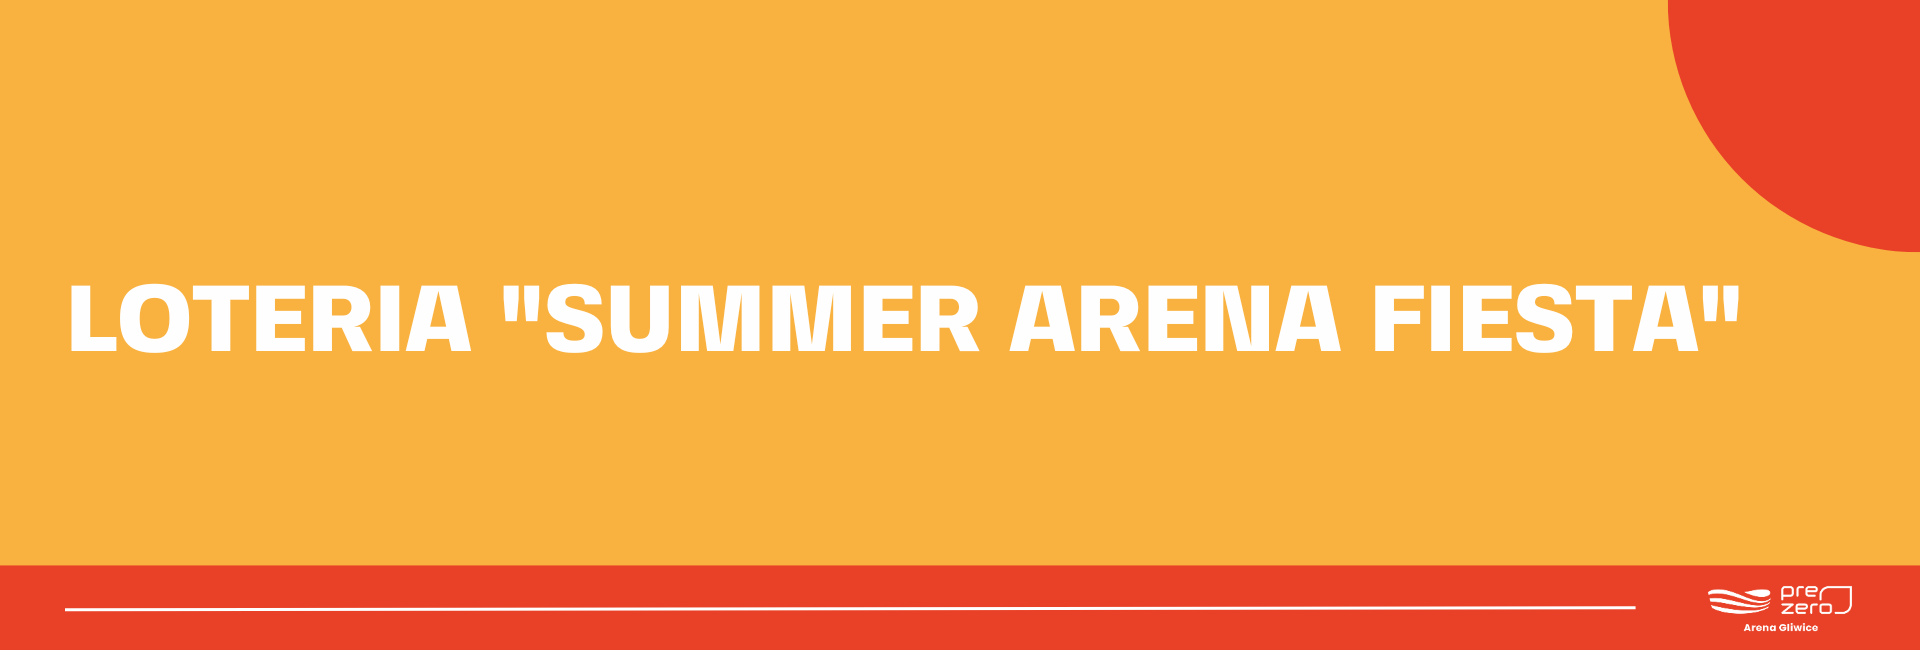 Loteria "Summer Arena Fiesta"